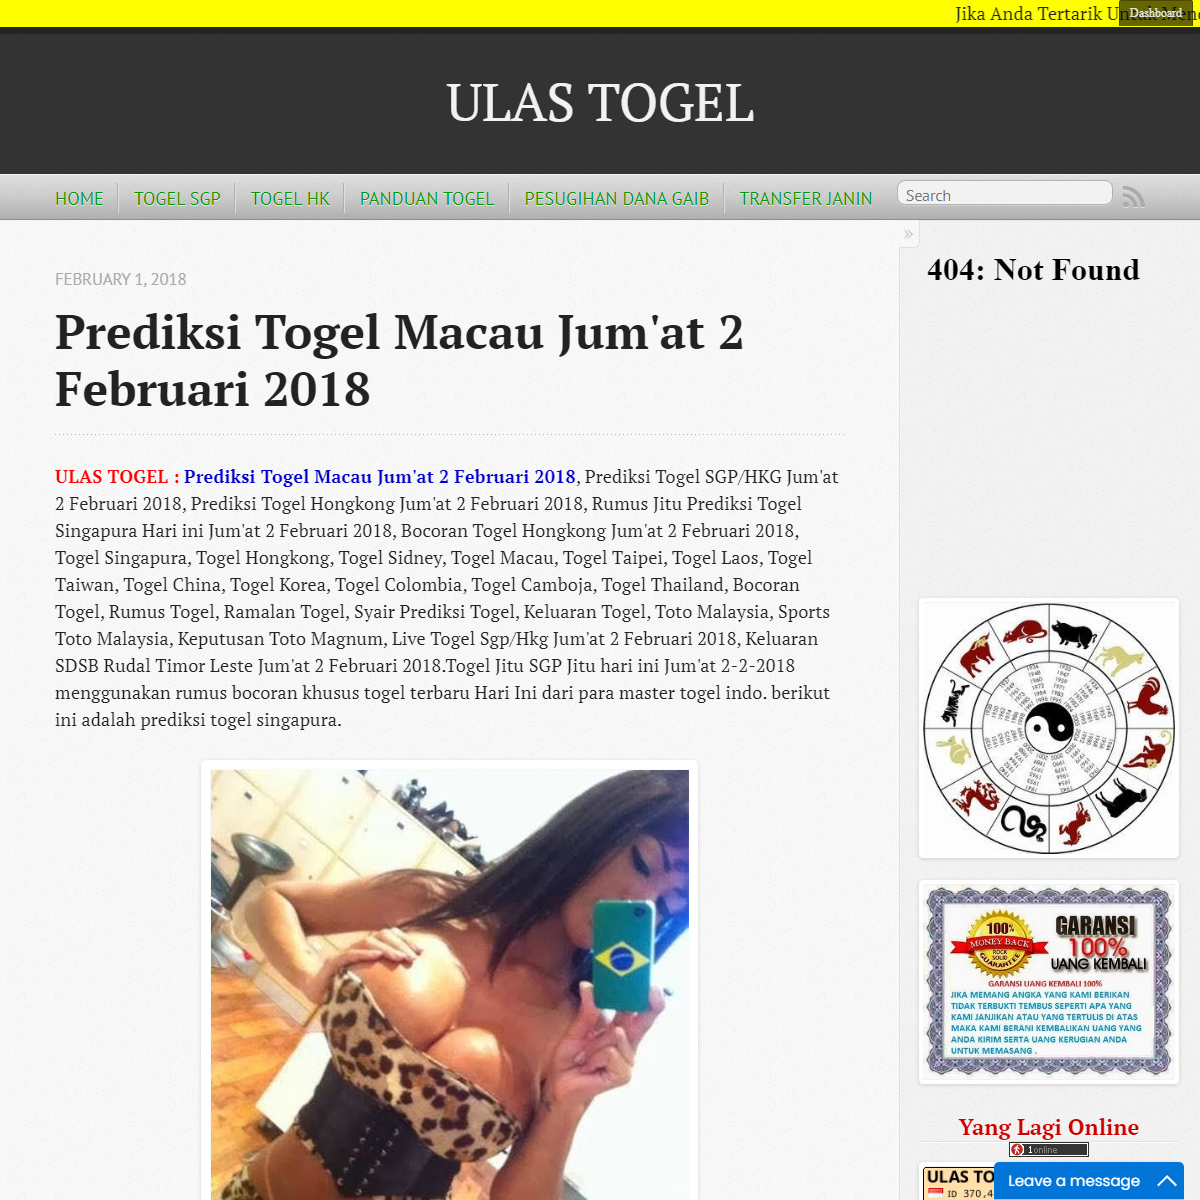 A complete backup of http://ulastogel.logdown.com/posts/5411783-prediksi-togel-macau-jum-at-2-februari-2018